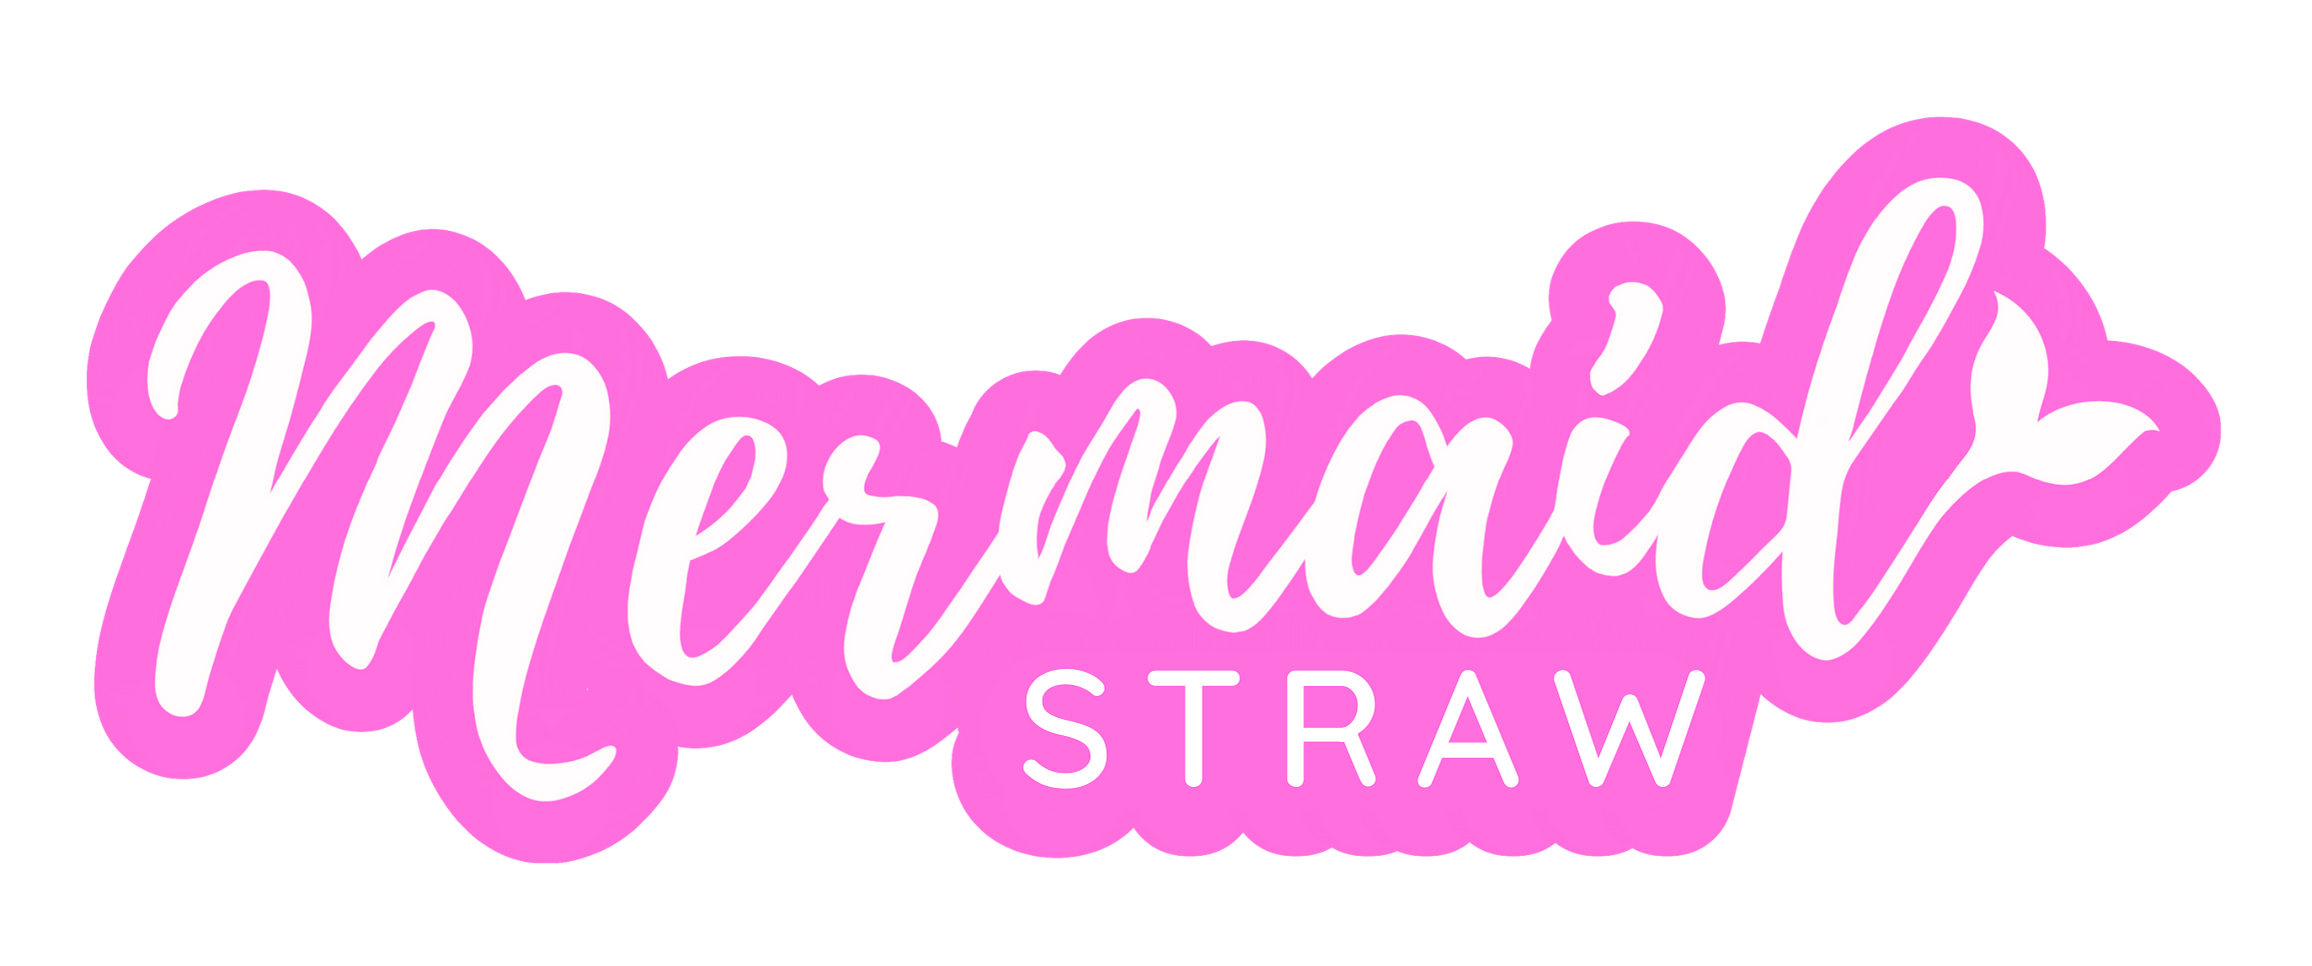 Mermaid Straw (@MermaidStraw) / X